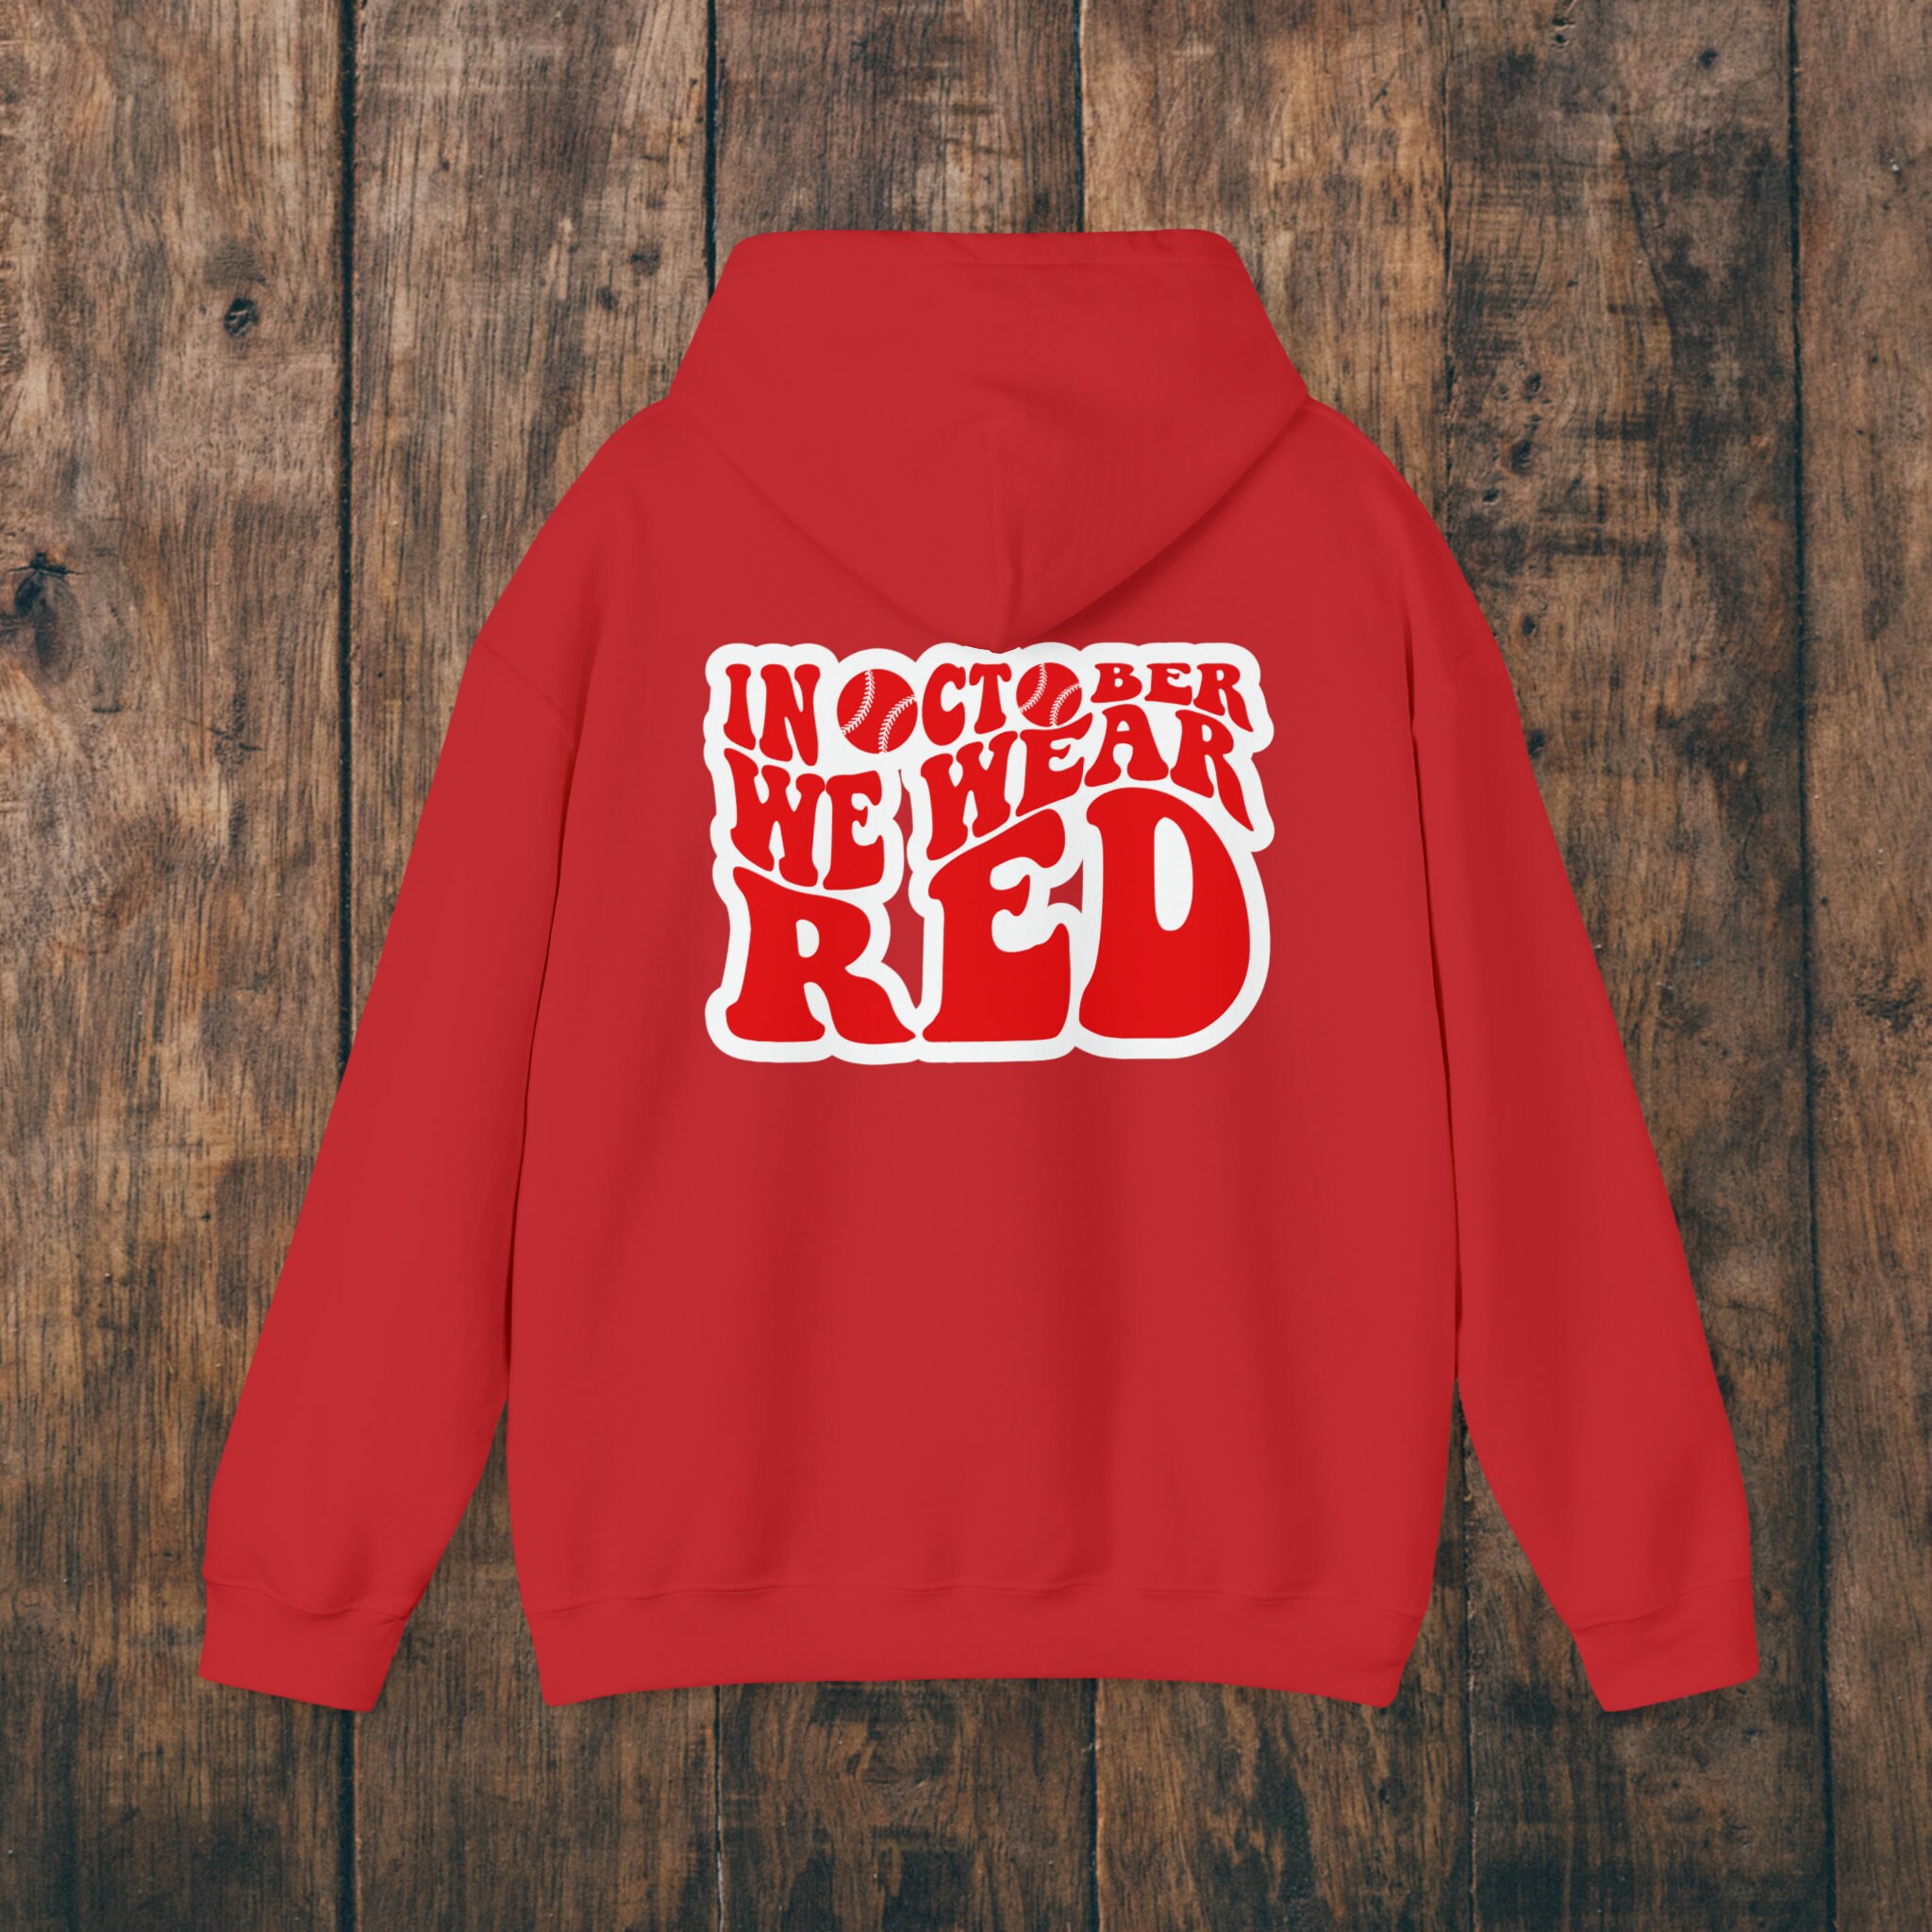 Red October Phillies Shirt Sweatshirt Hoodie Mens Womens Kids